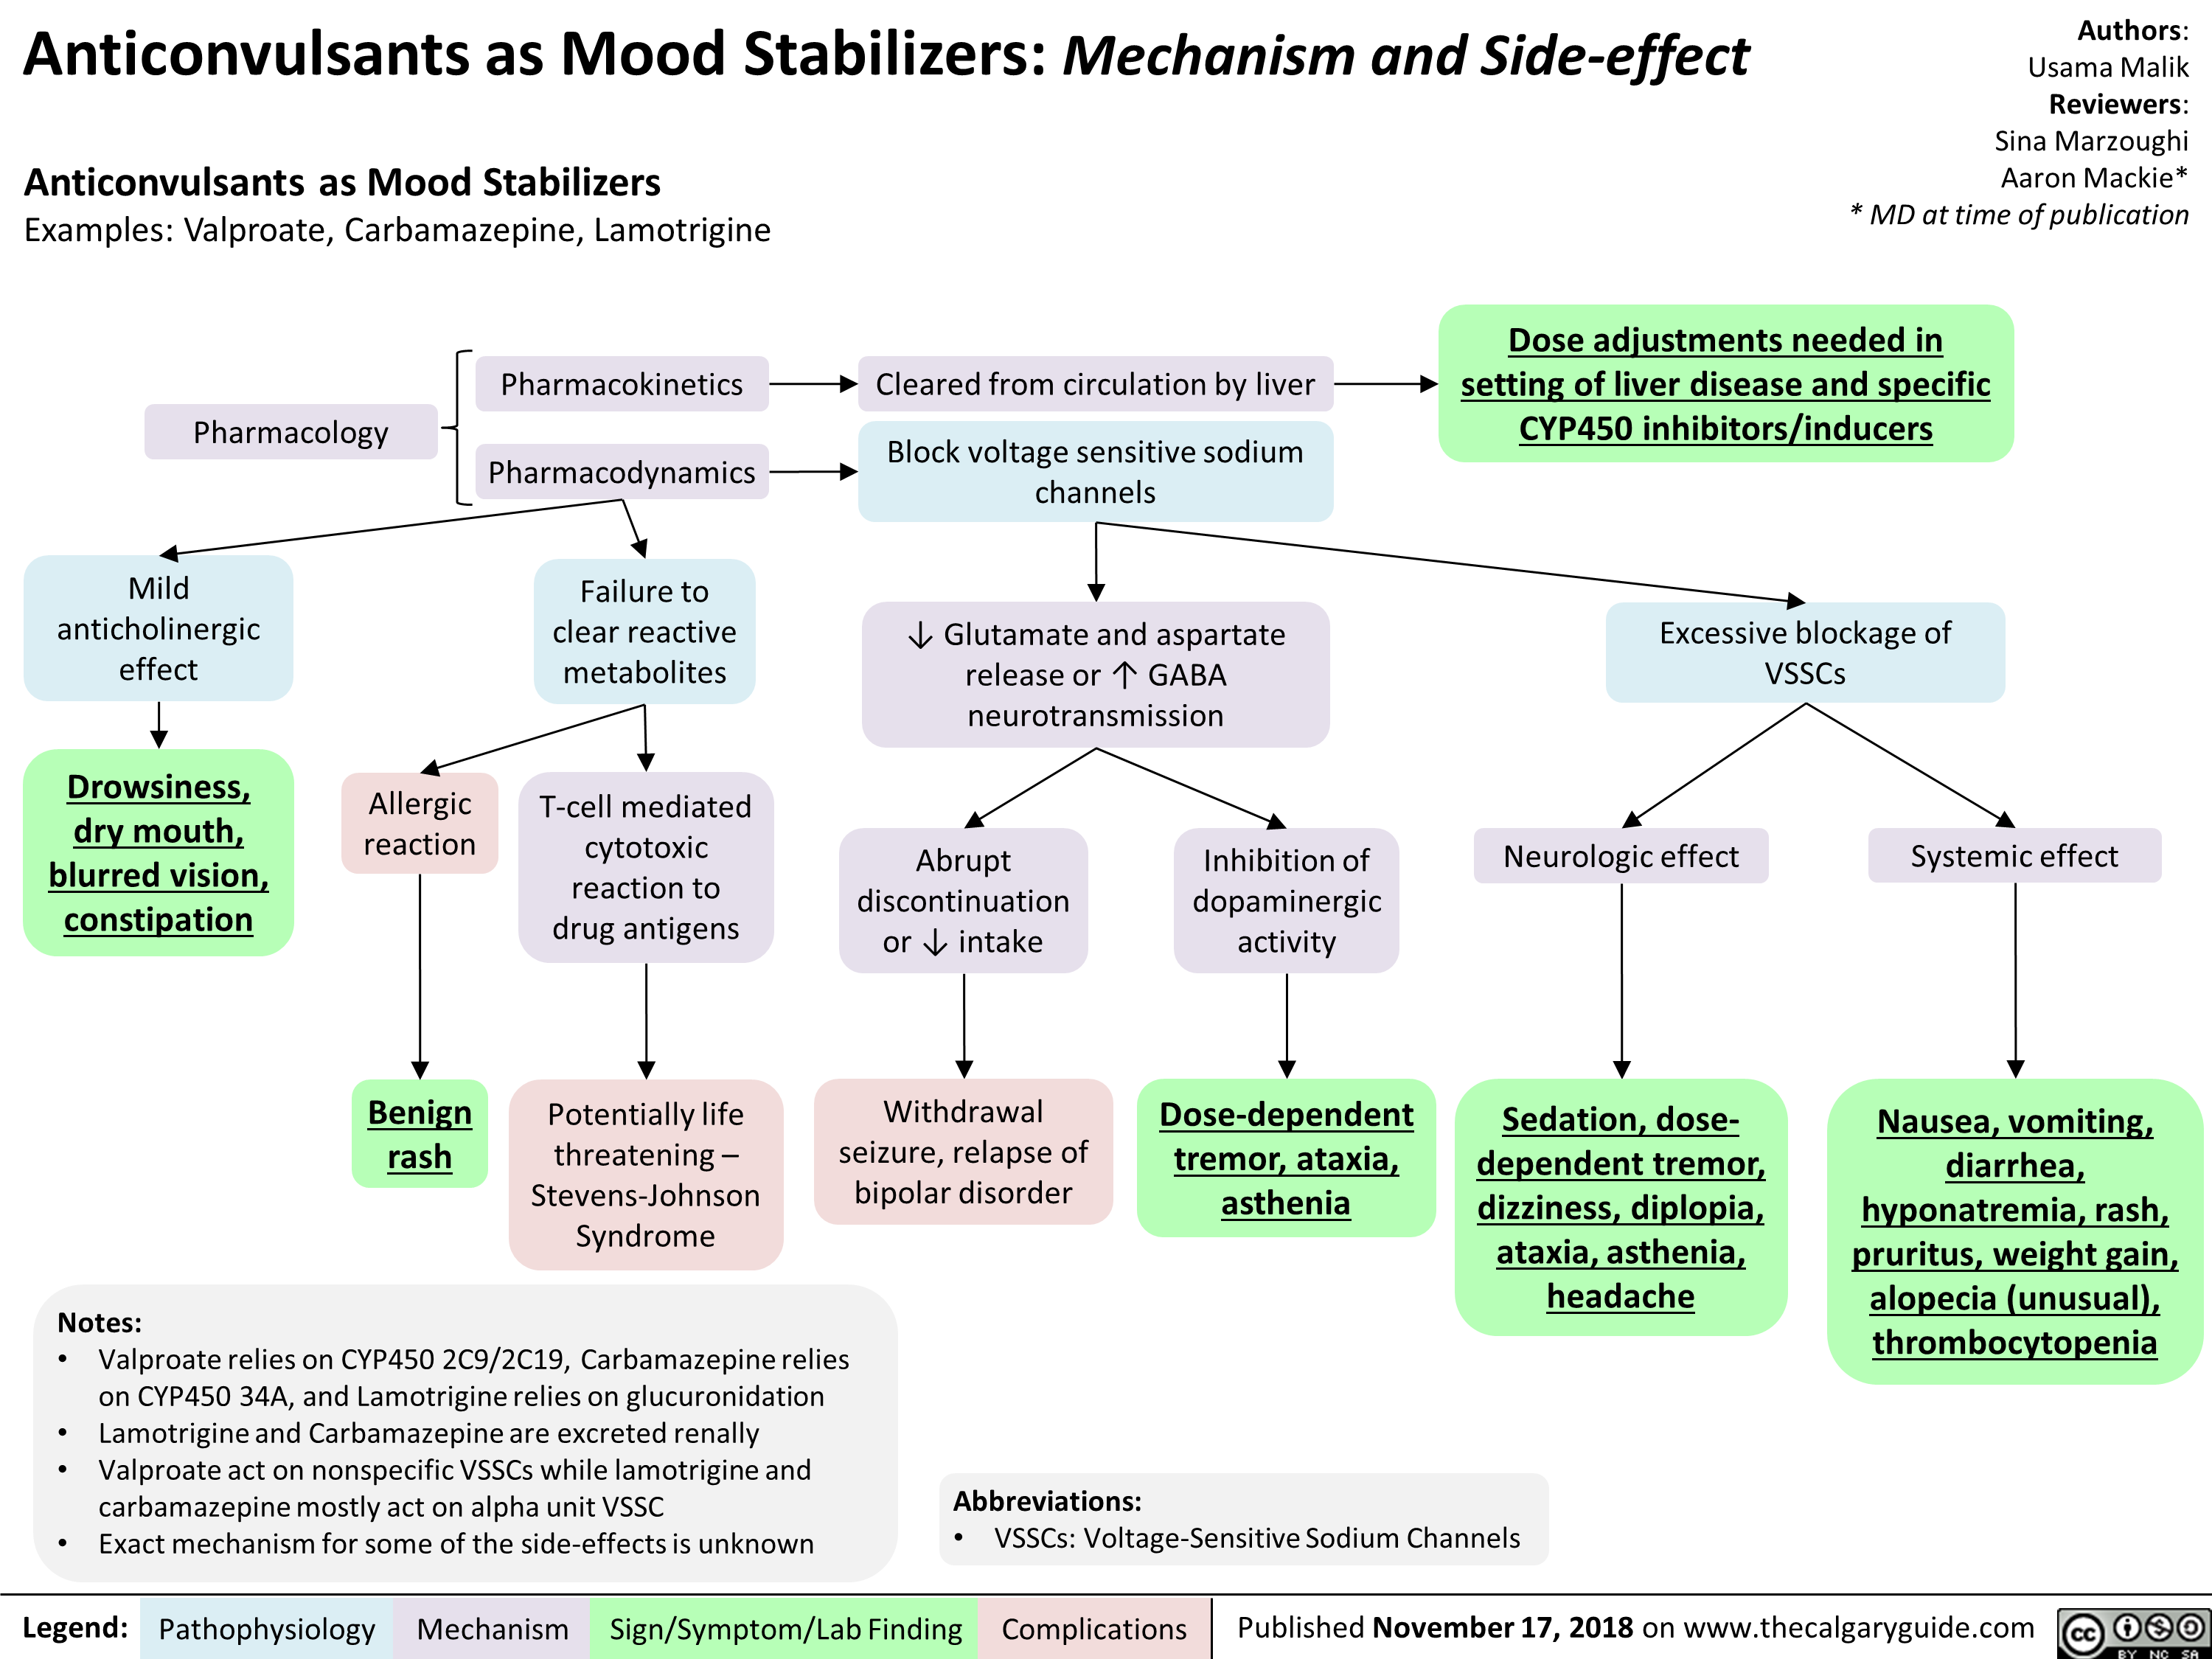 Mood stabilization effects